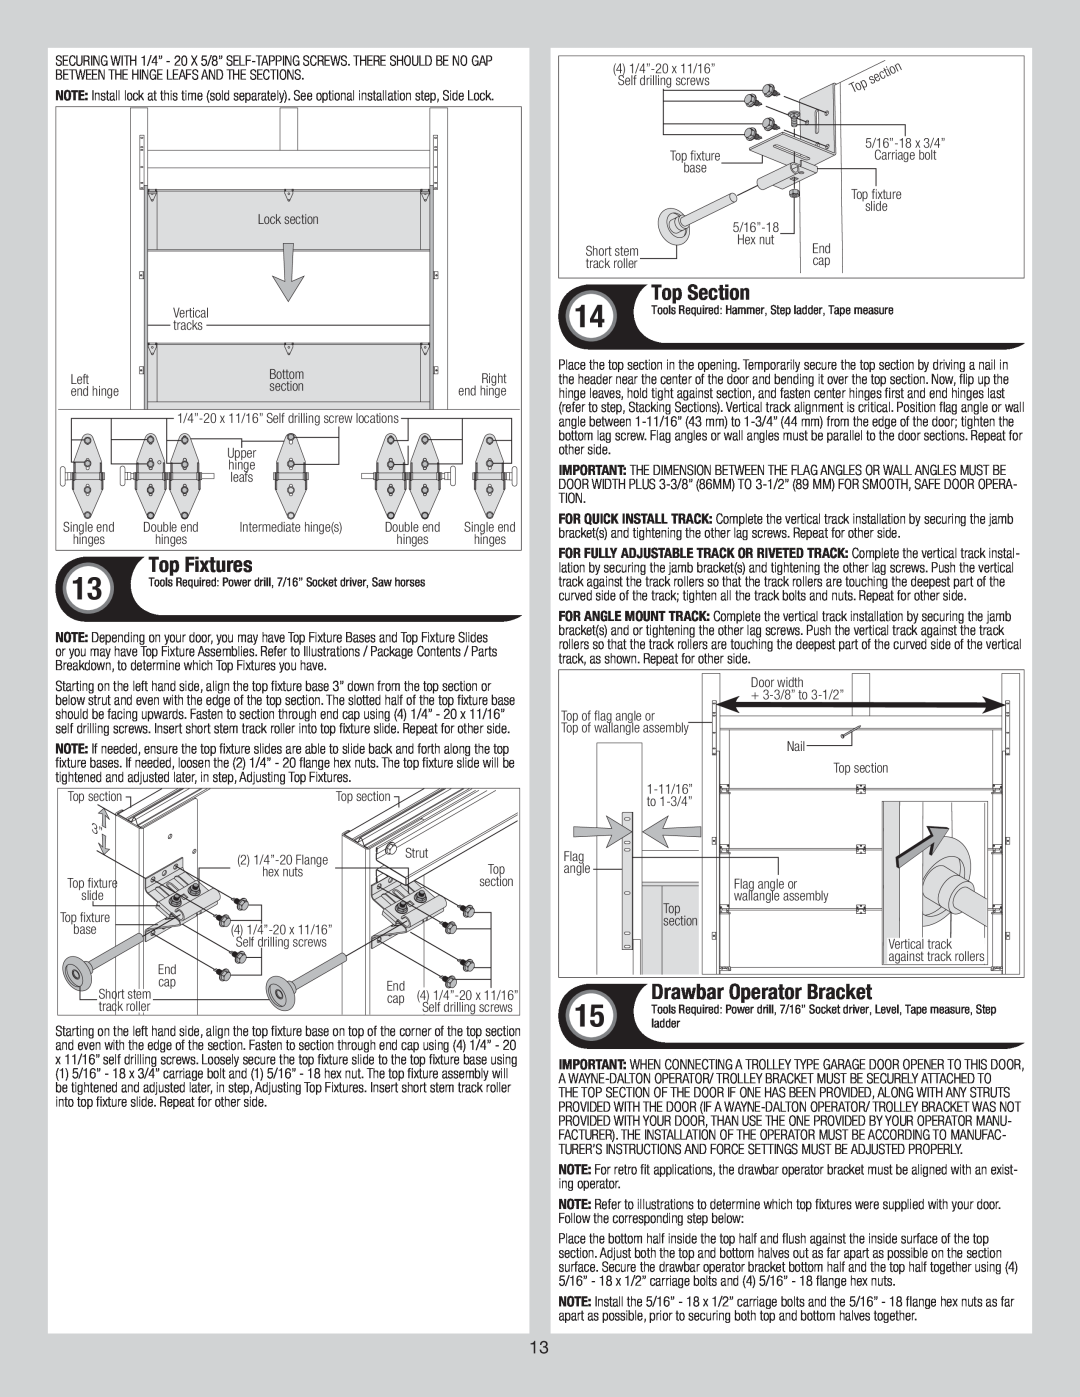 Wayne-Dalton 8300/8500 installation instructions Top Fixtures, Top Section, Drawbar Operator Bracket 